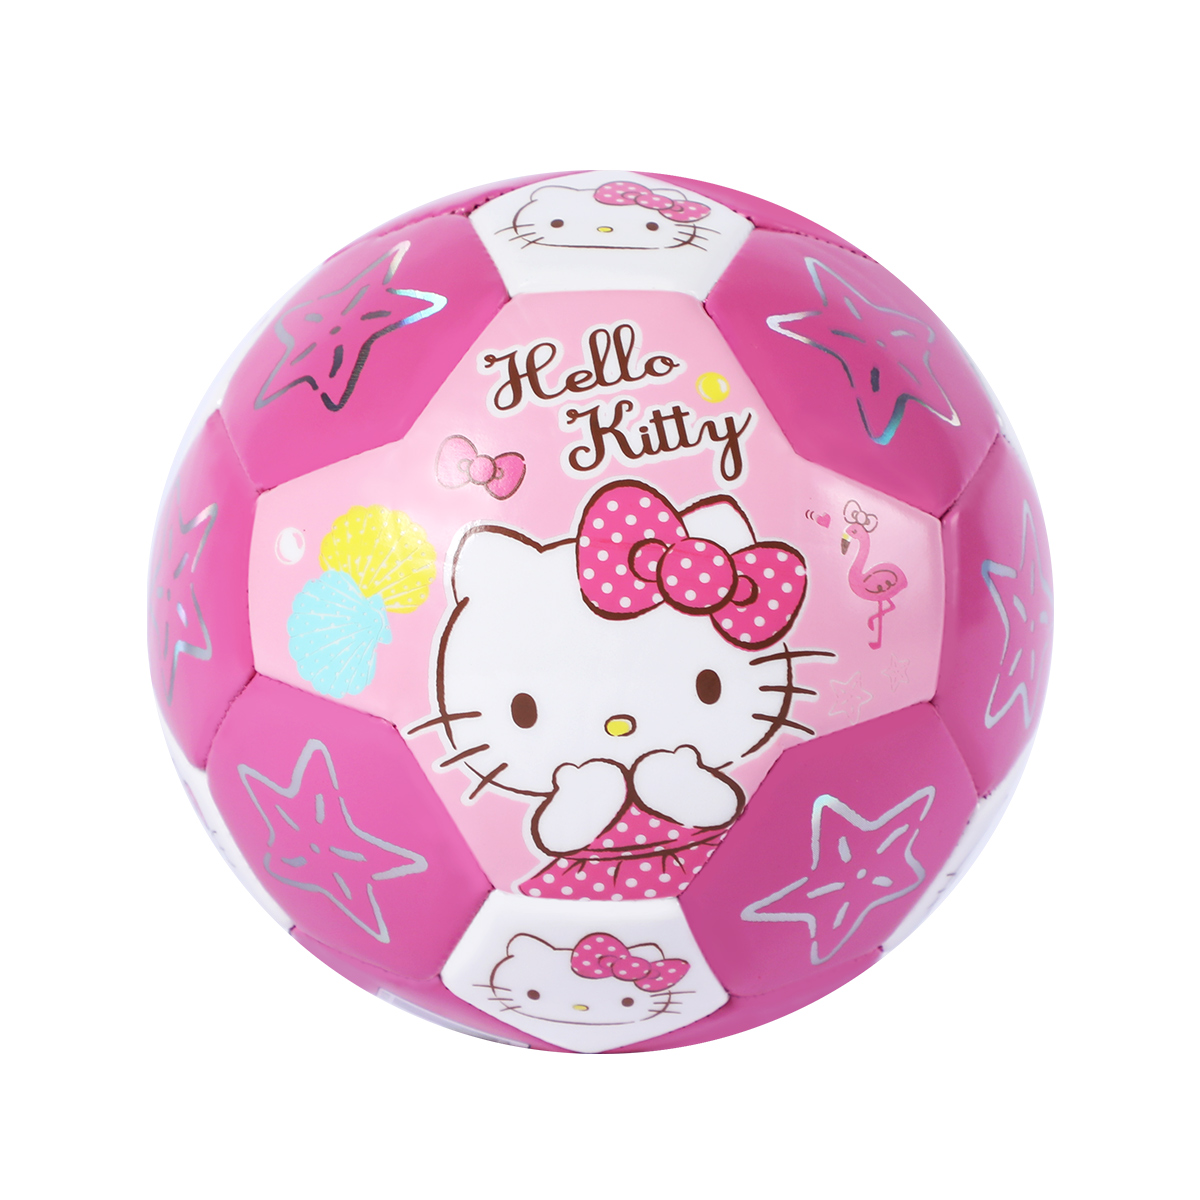 Mesuca Disney Frozen Micky Princess Hello Kitty 2# 3# Football Soccer for Children Boys and Girls